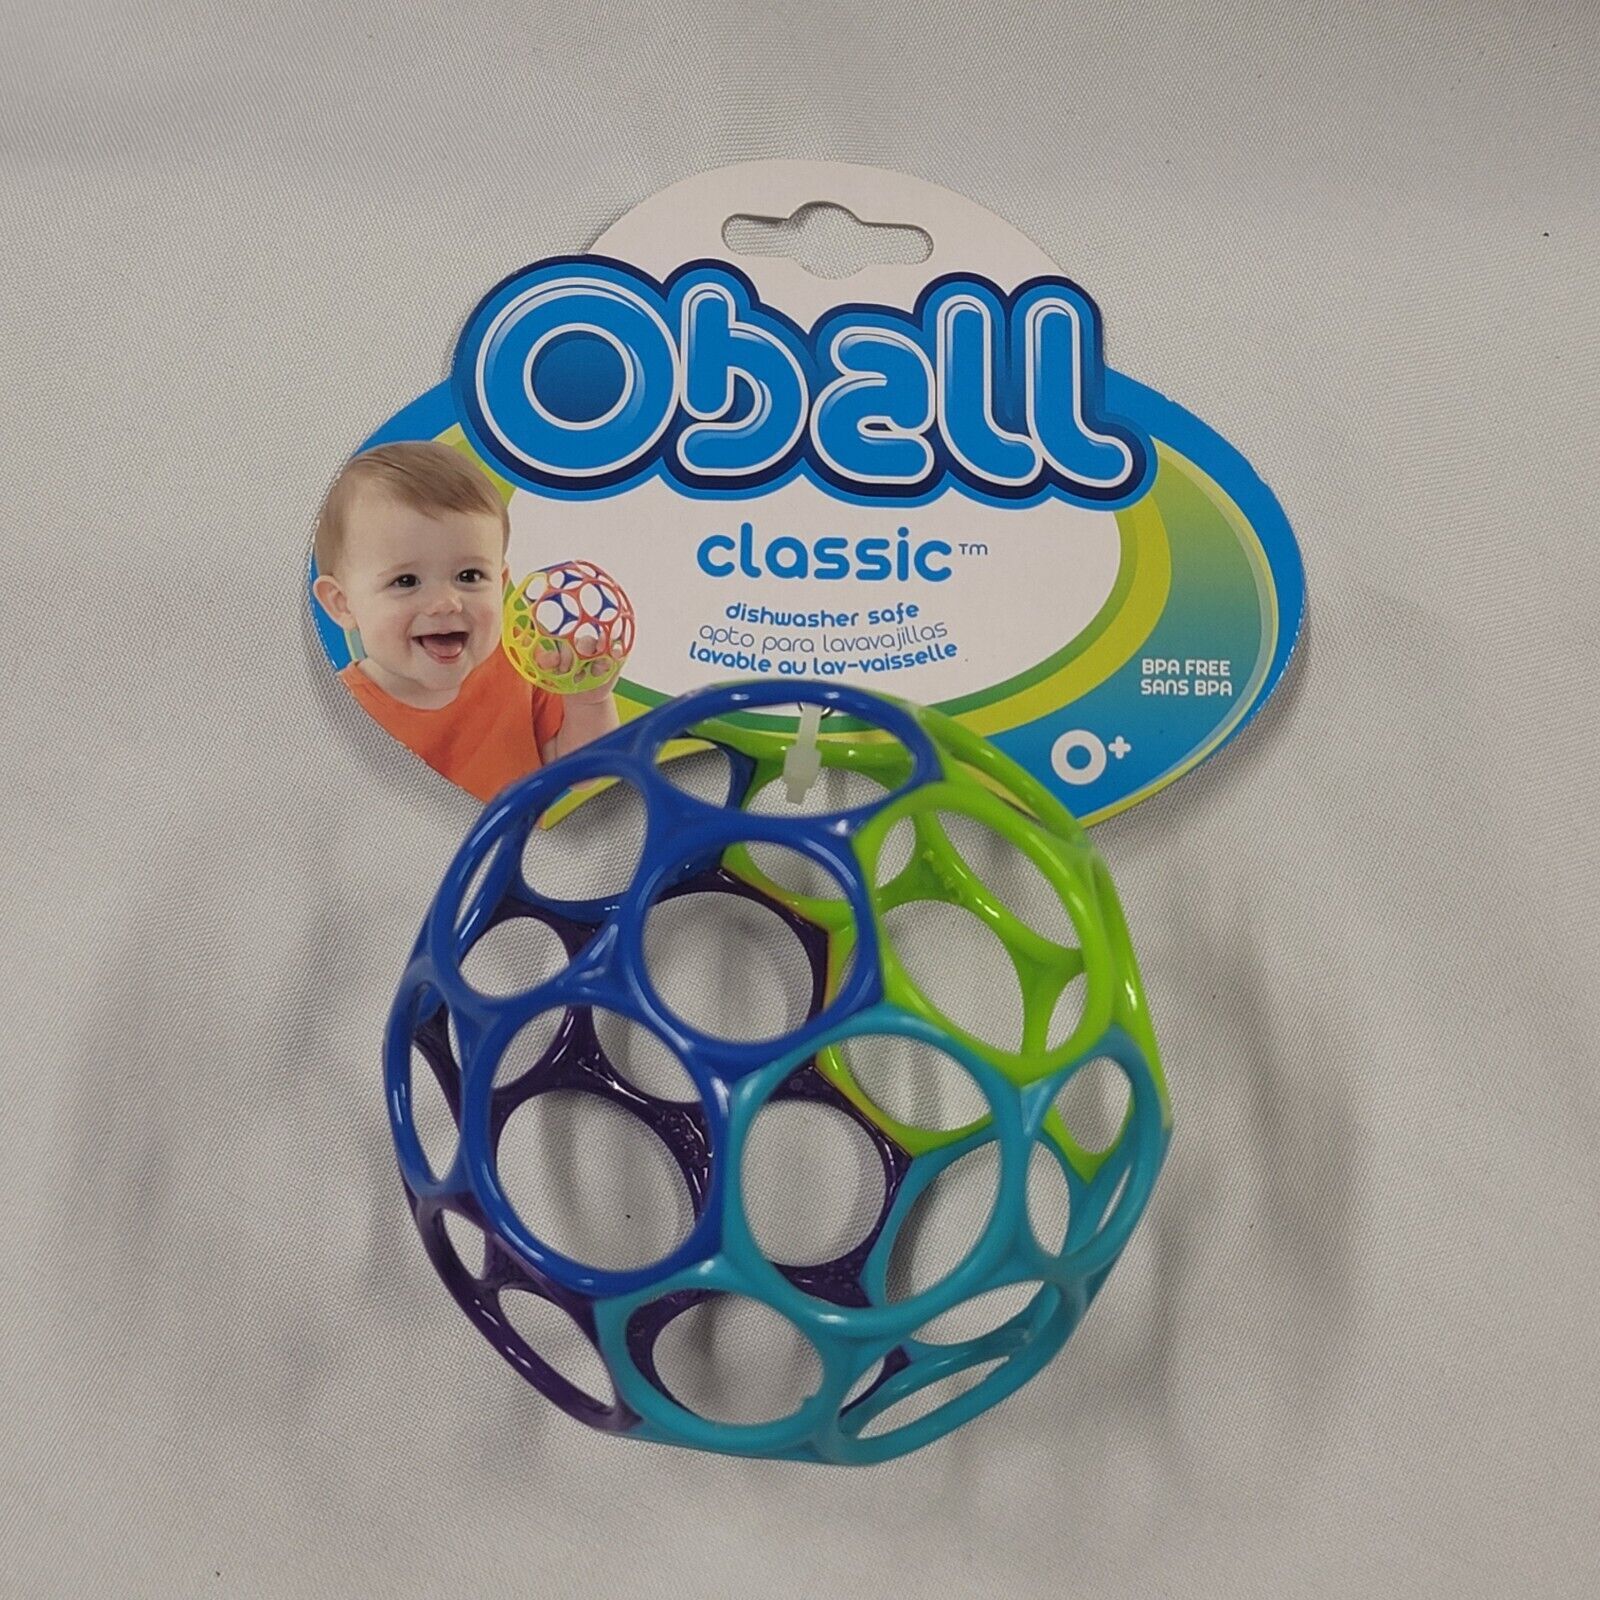 Oball Baby Grasping Ball Easy Grasp Classic Blue Aqua Green Kids II NEW - $14.84